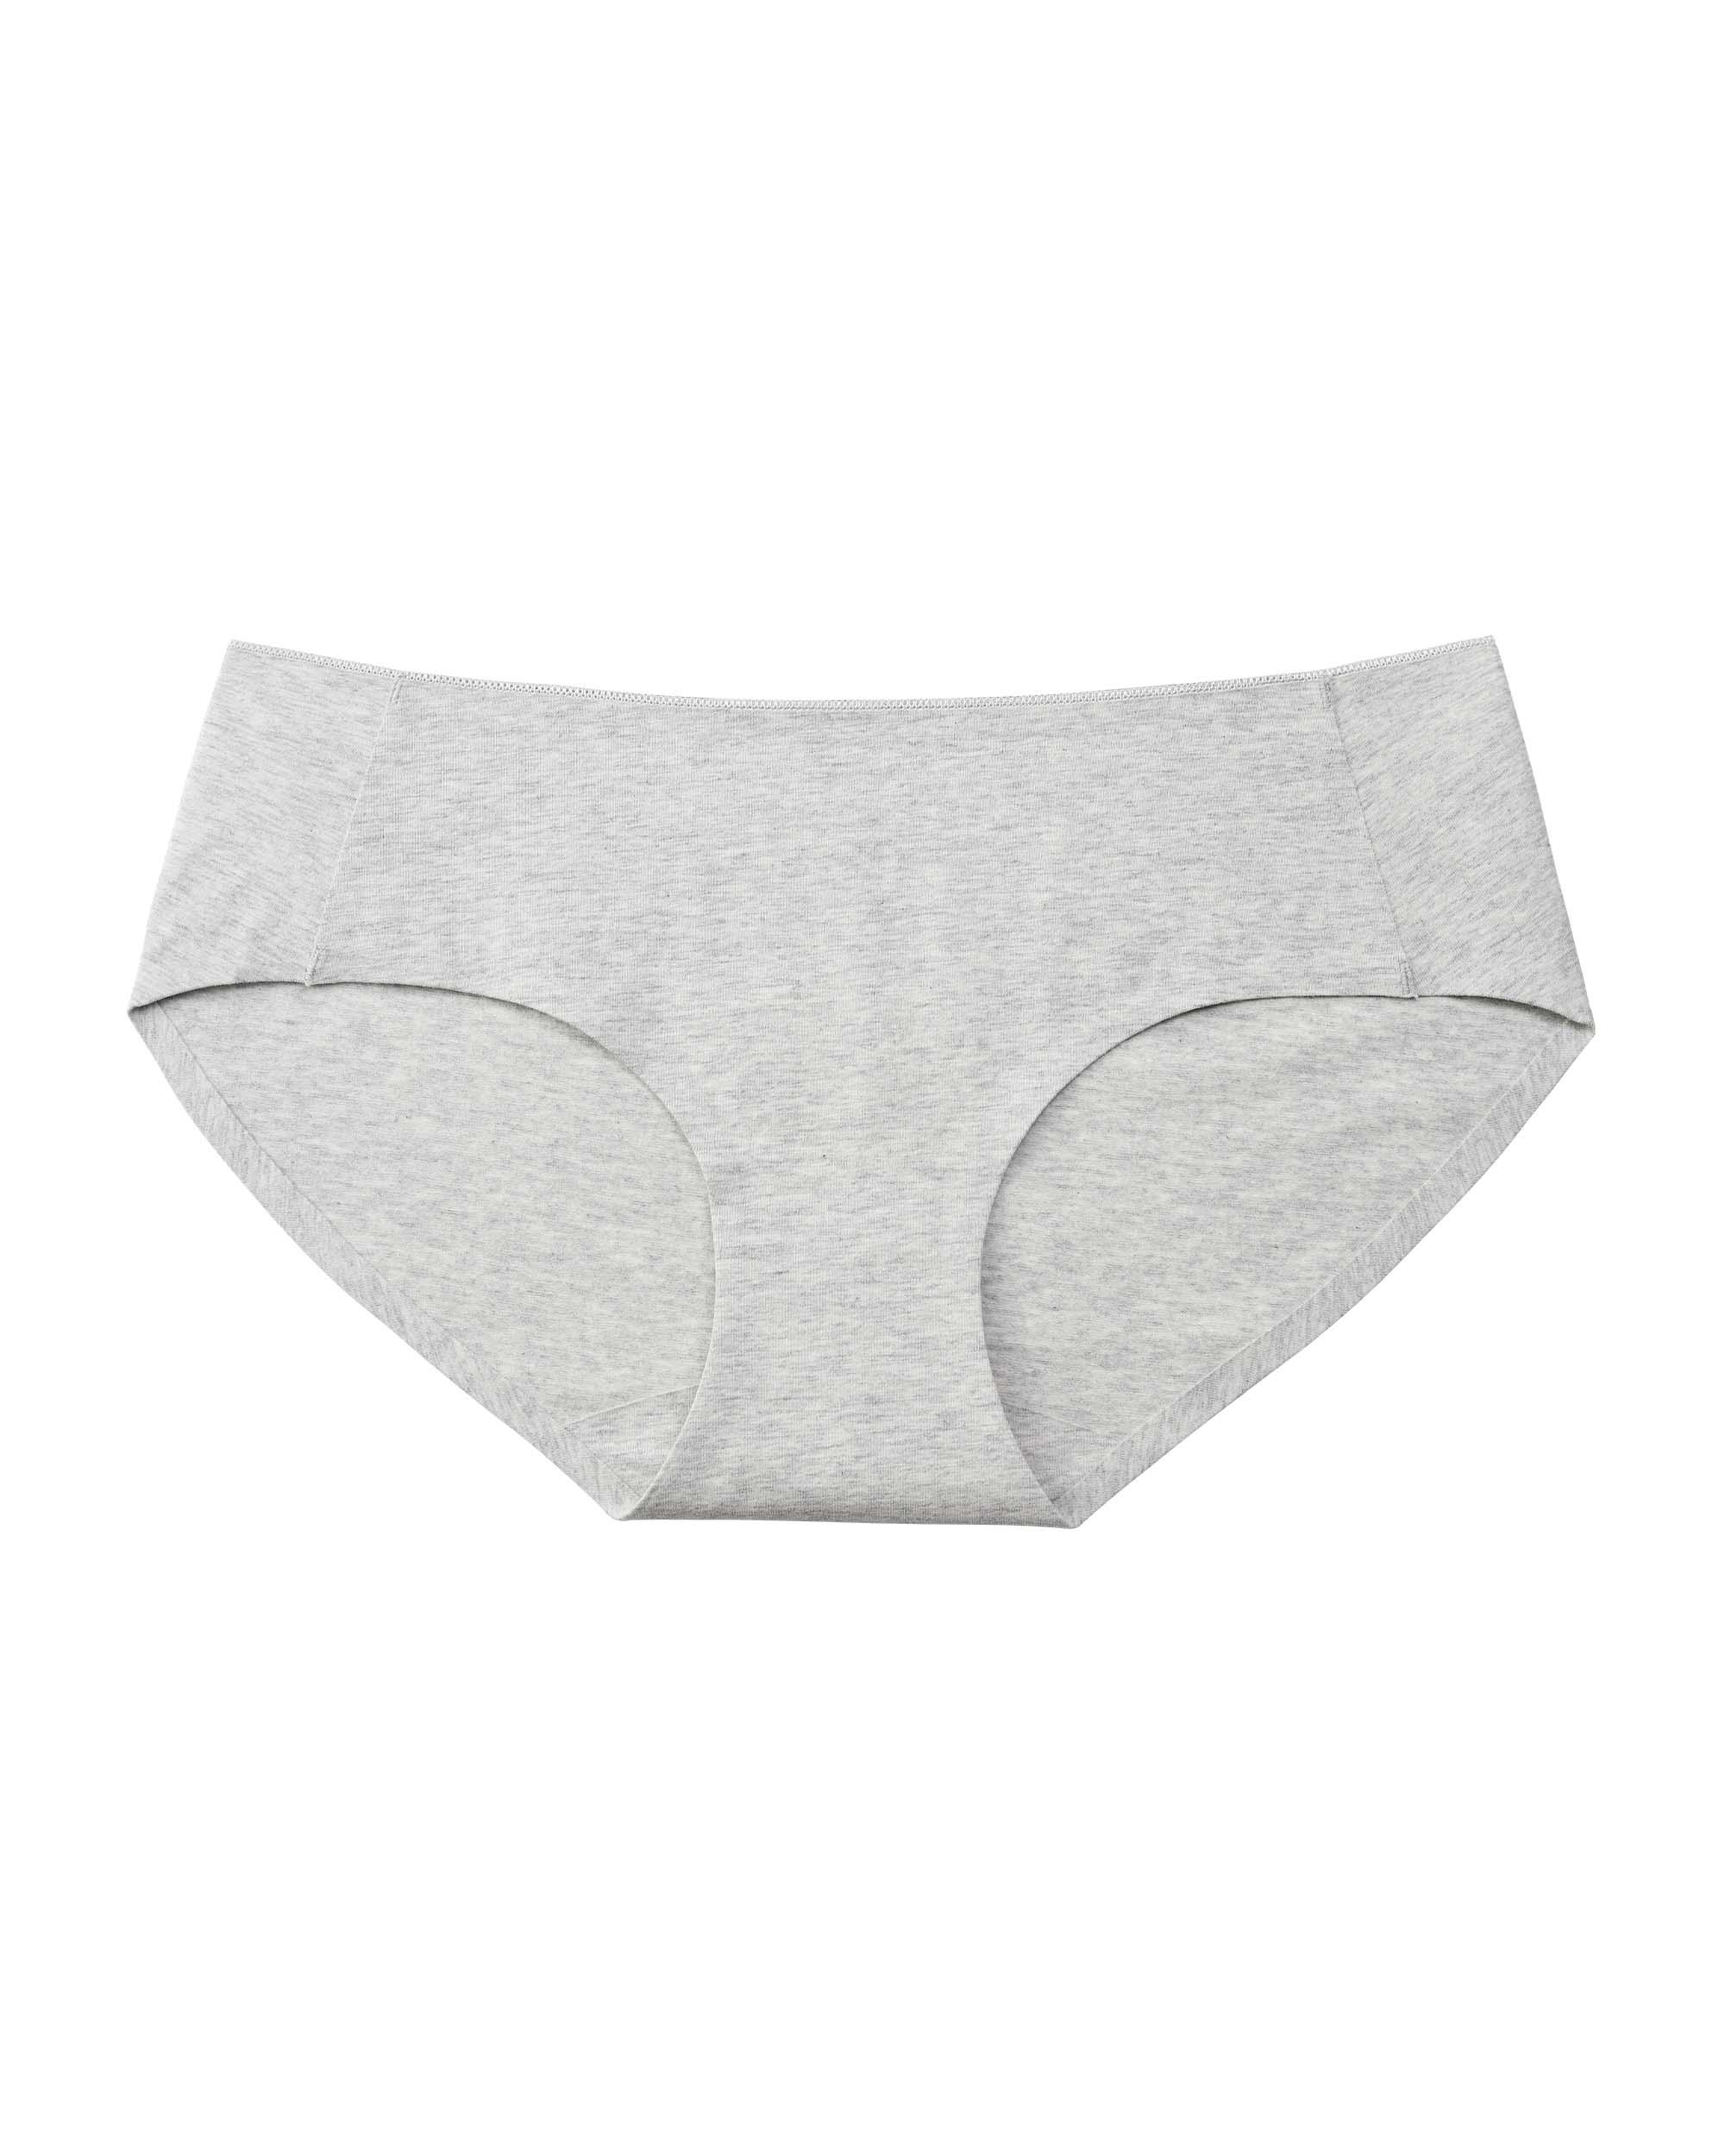 Mid Rise Cotton Underwear Girls Seamless Brief - ALTHEANRAY